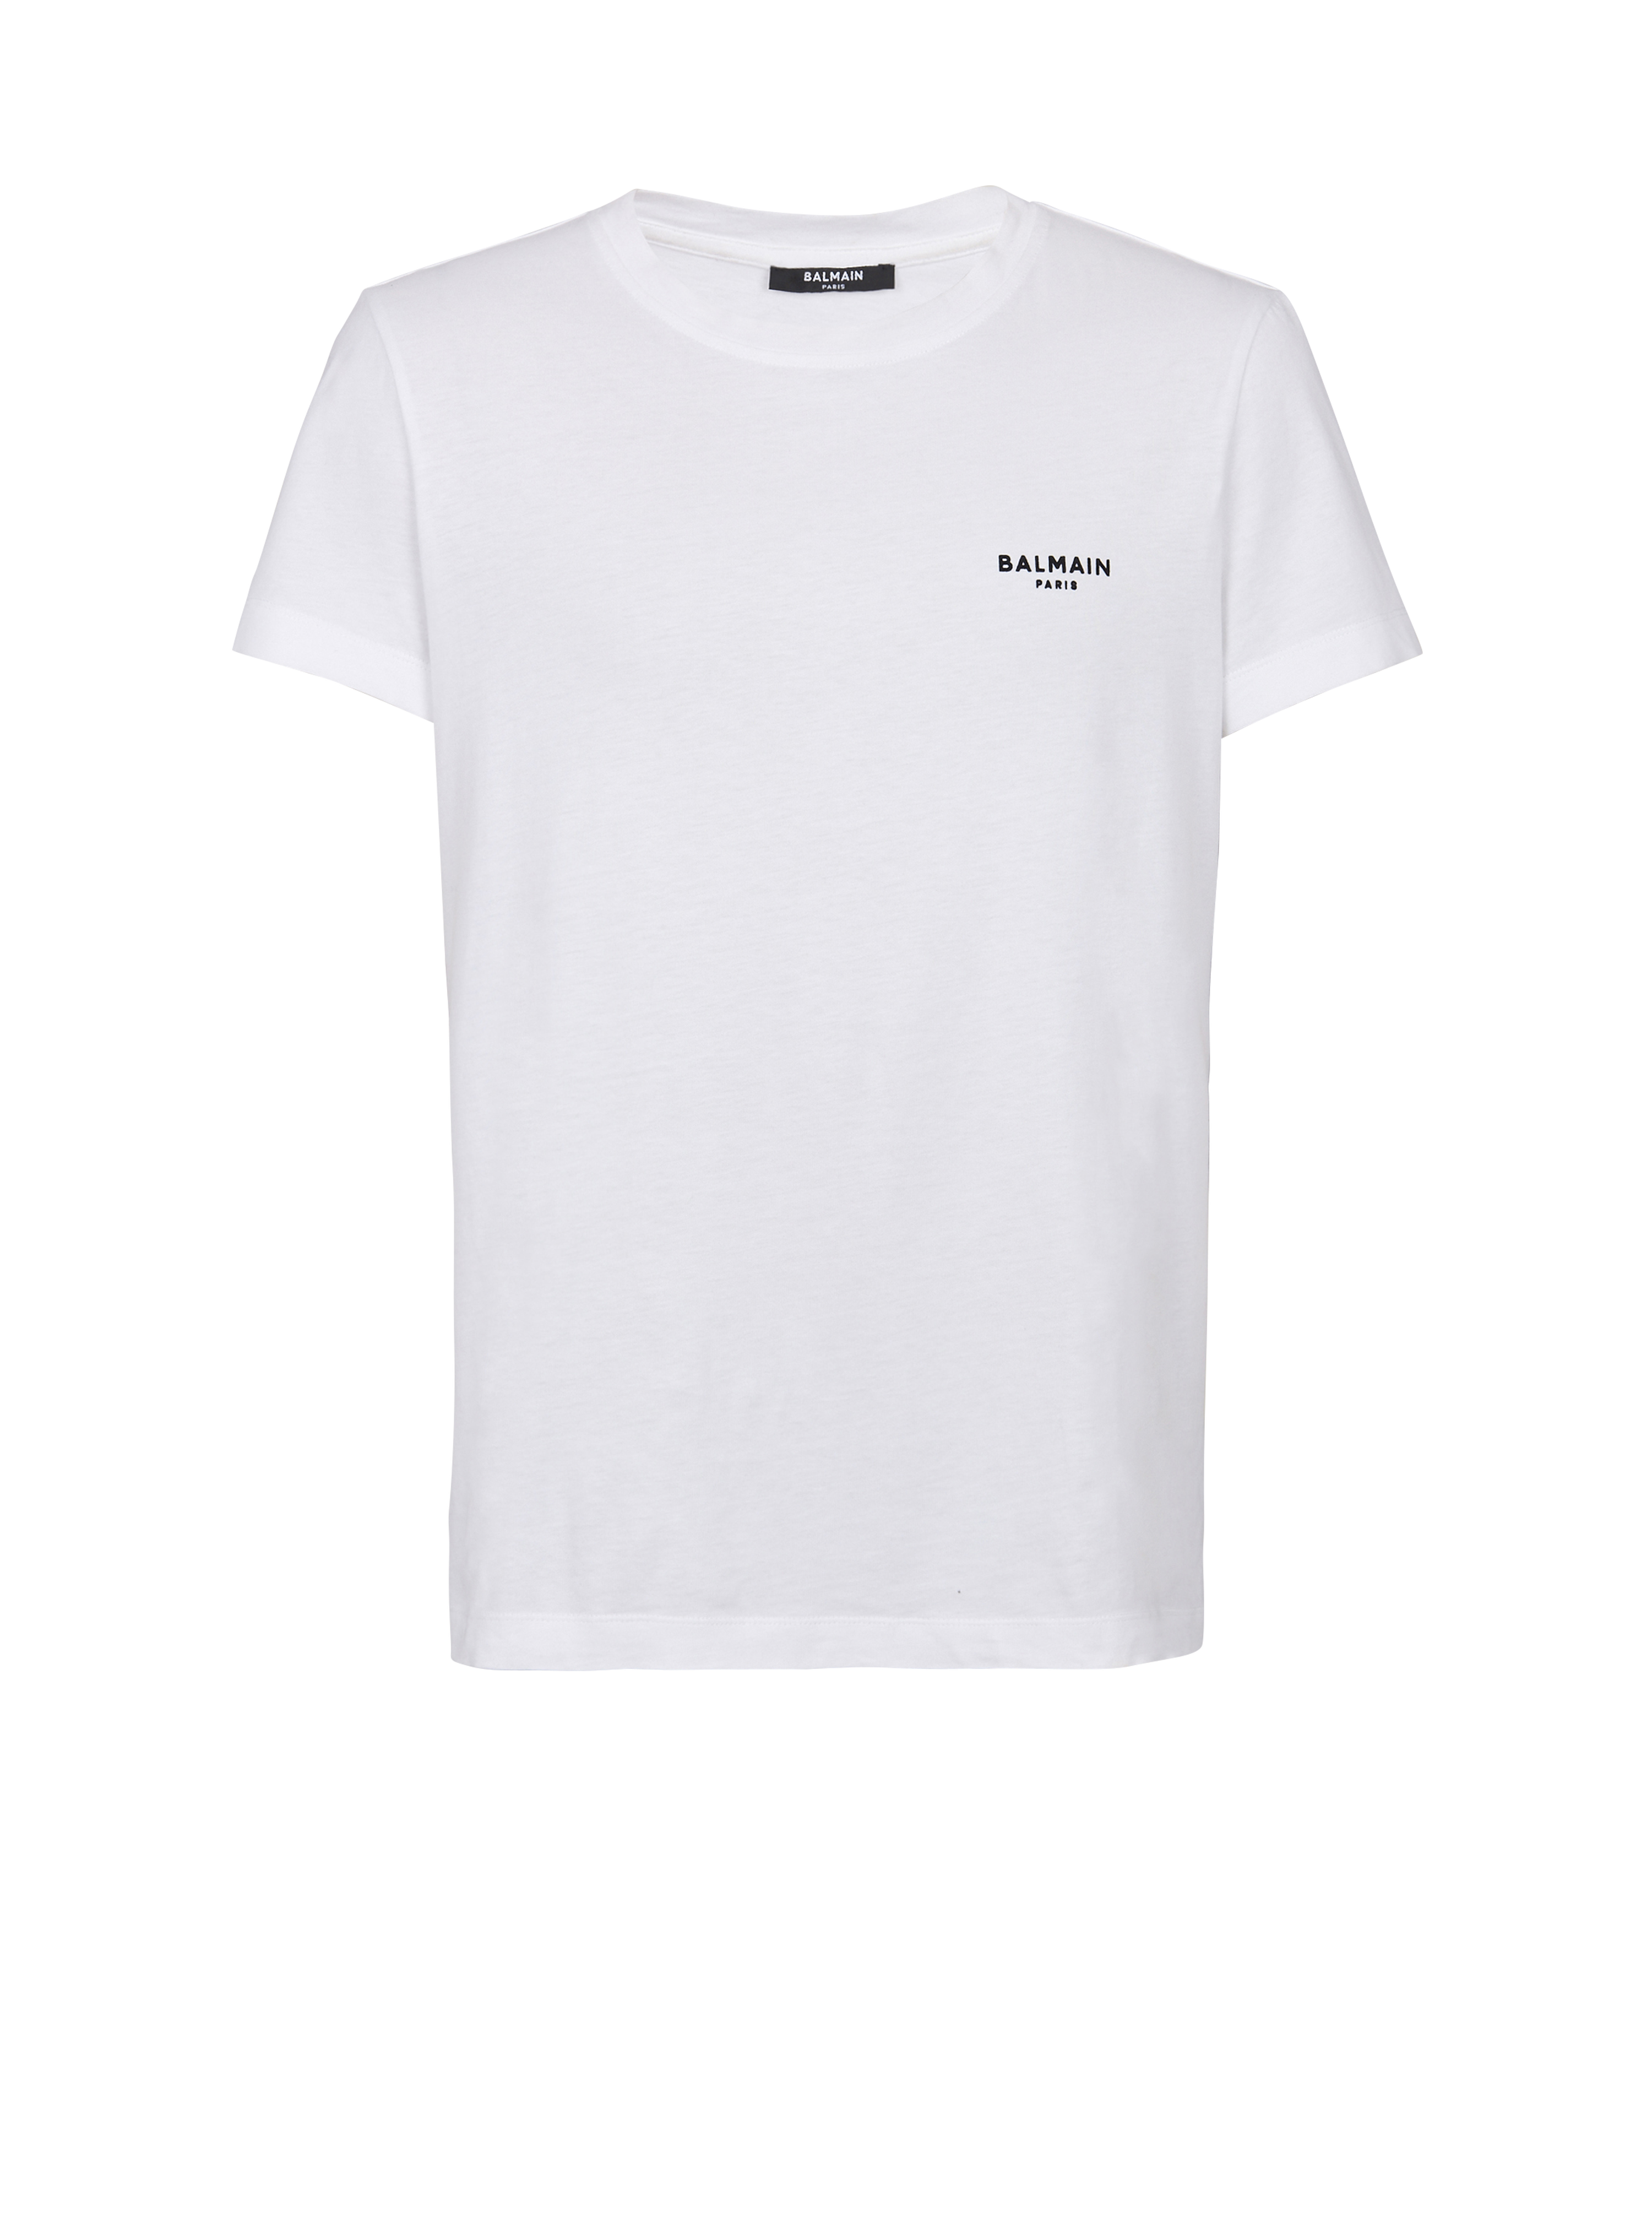 T-shirt en coton floqué petit logo Balmain Paris, blanc